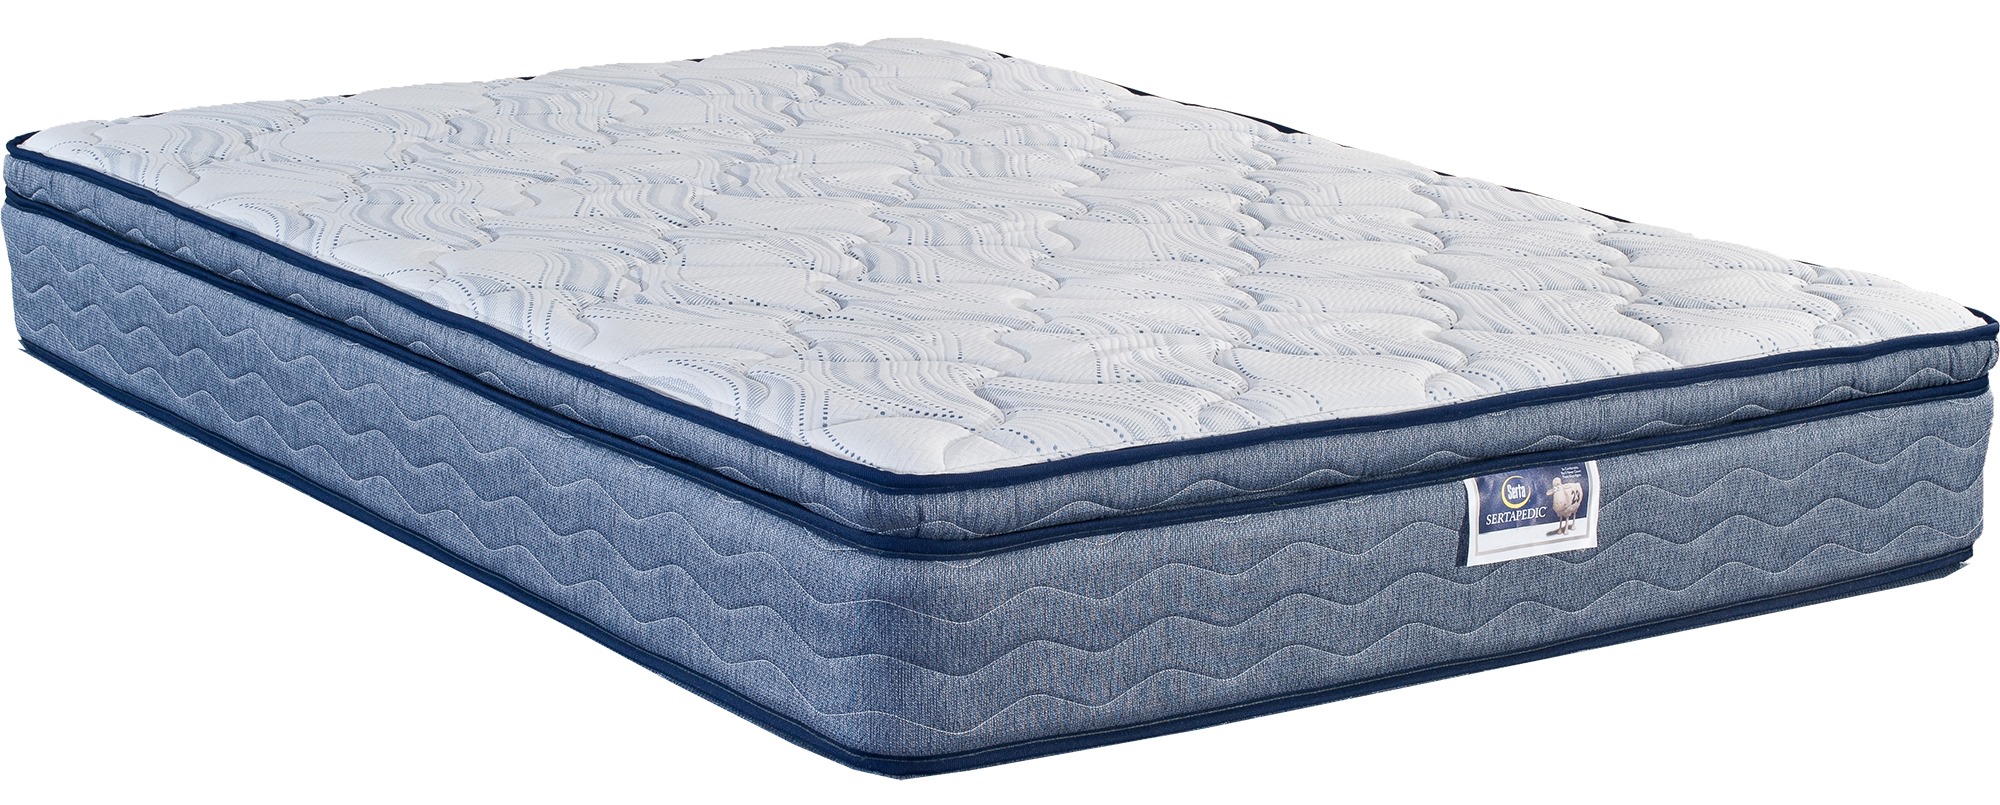 rrating for serta formosa eurotop mattress